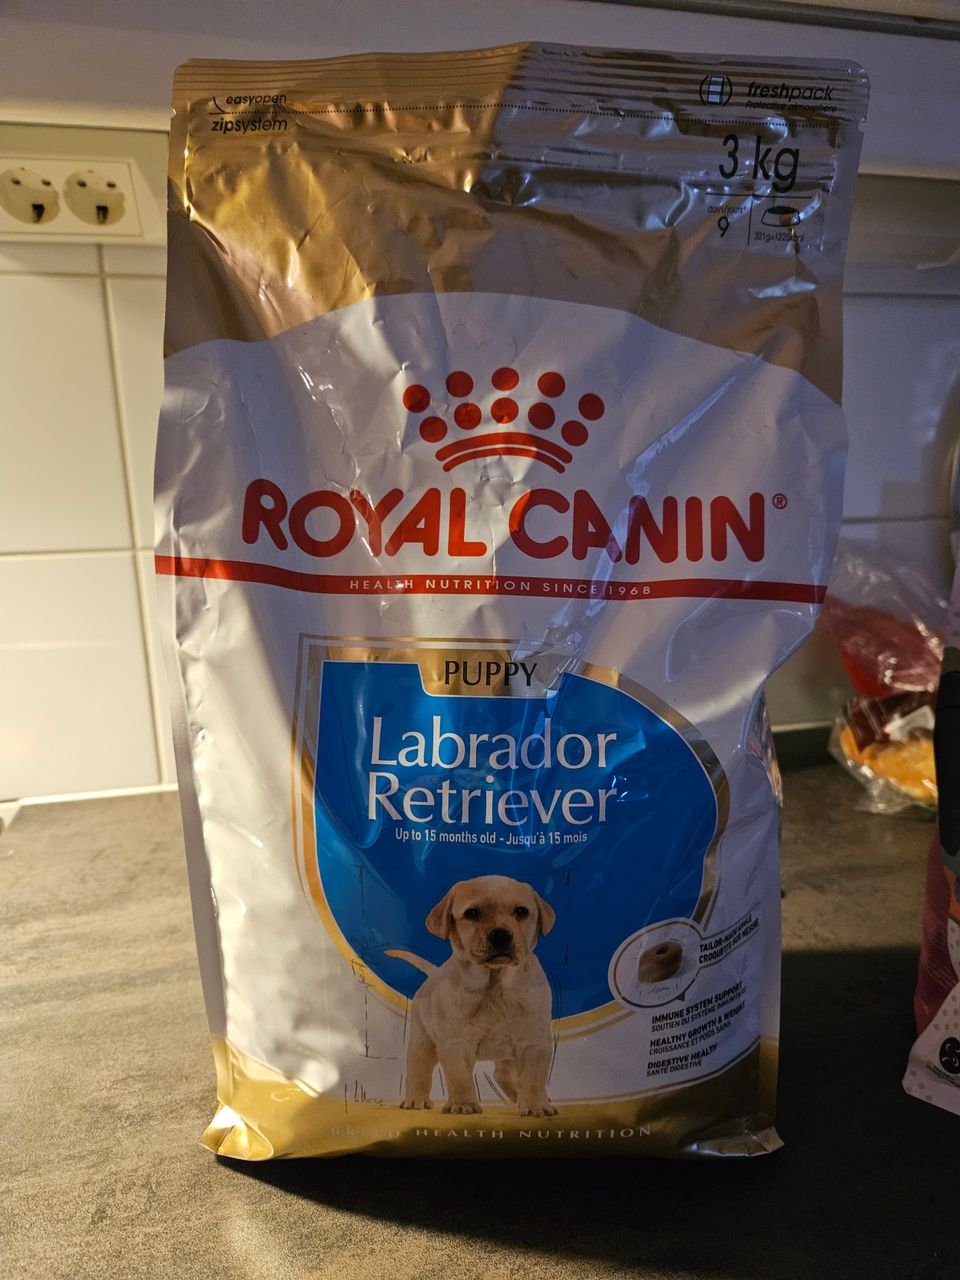 Royal canin puppy